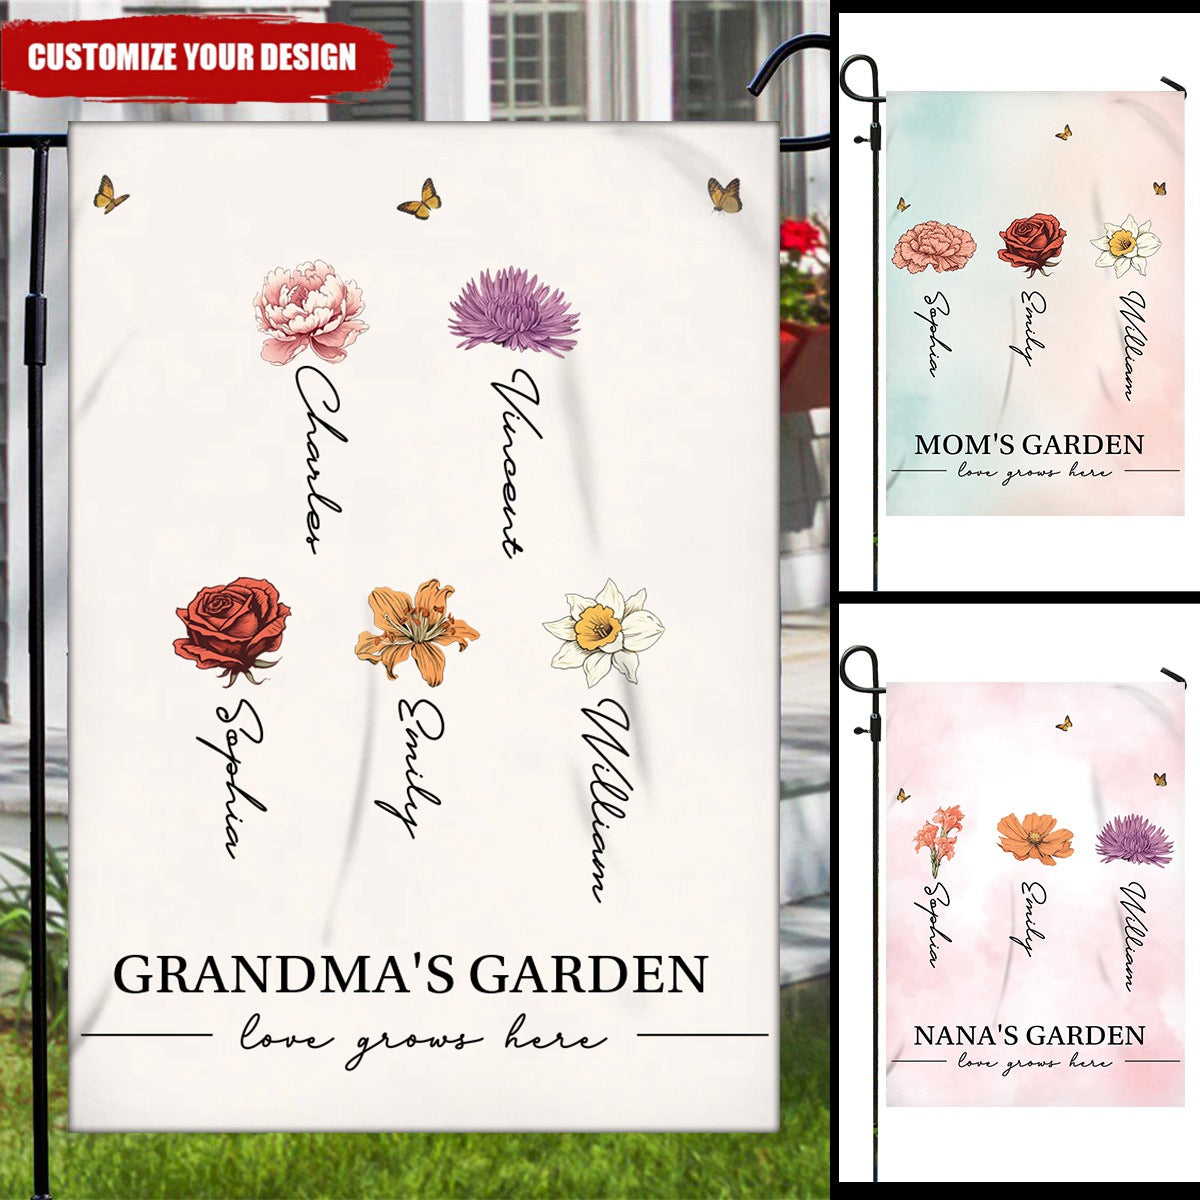 Grandma‘s Garden Love Grows Here Beautiful Birth Month Flower Gift For Grandma Mom Personalized Garden Flag